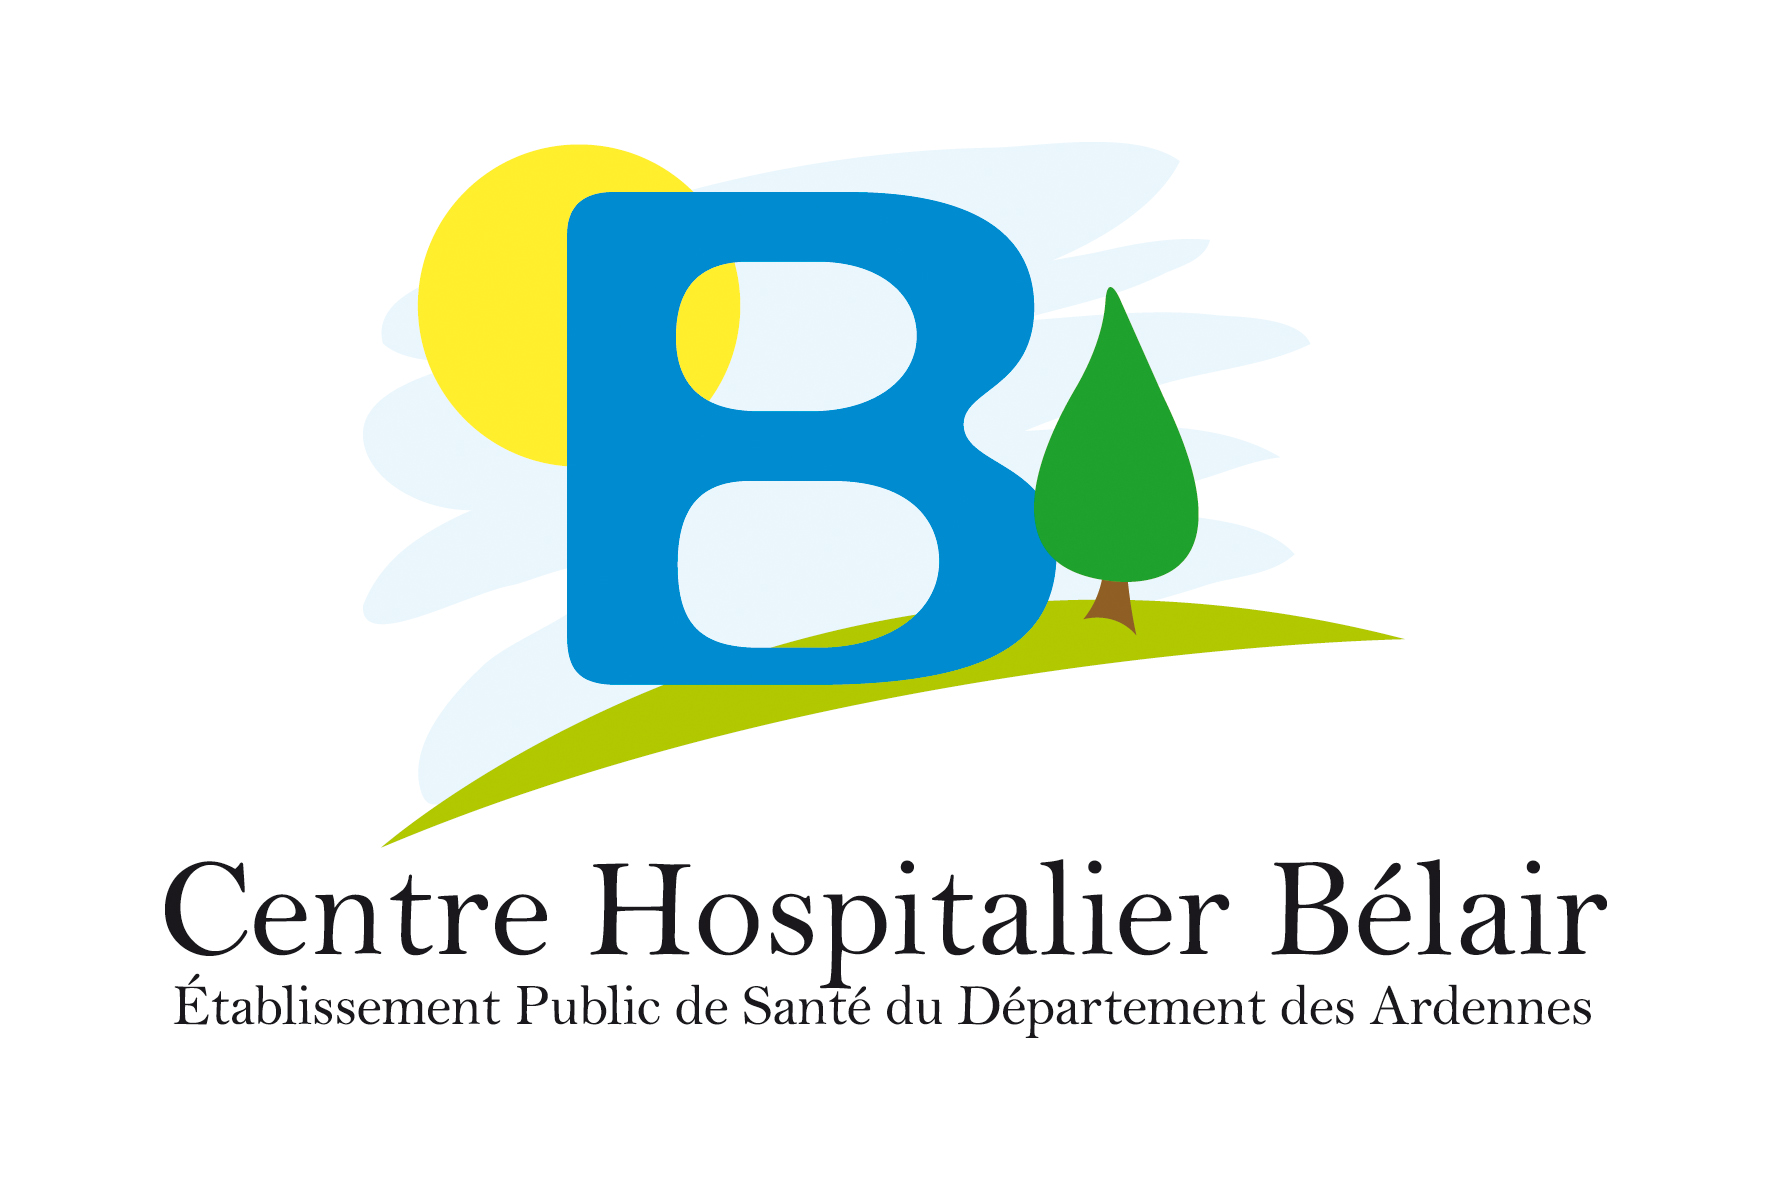 Centre Hospitalier Bélair logo